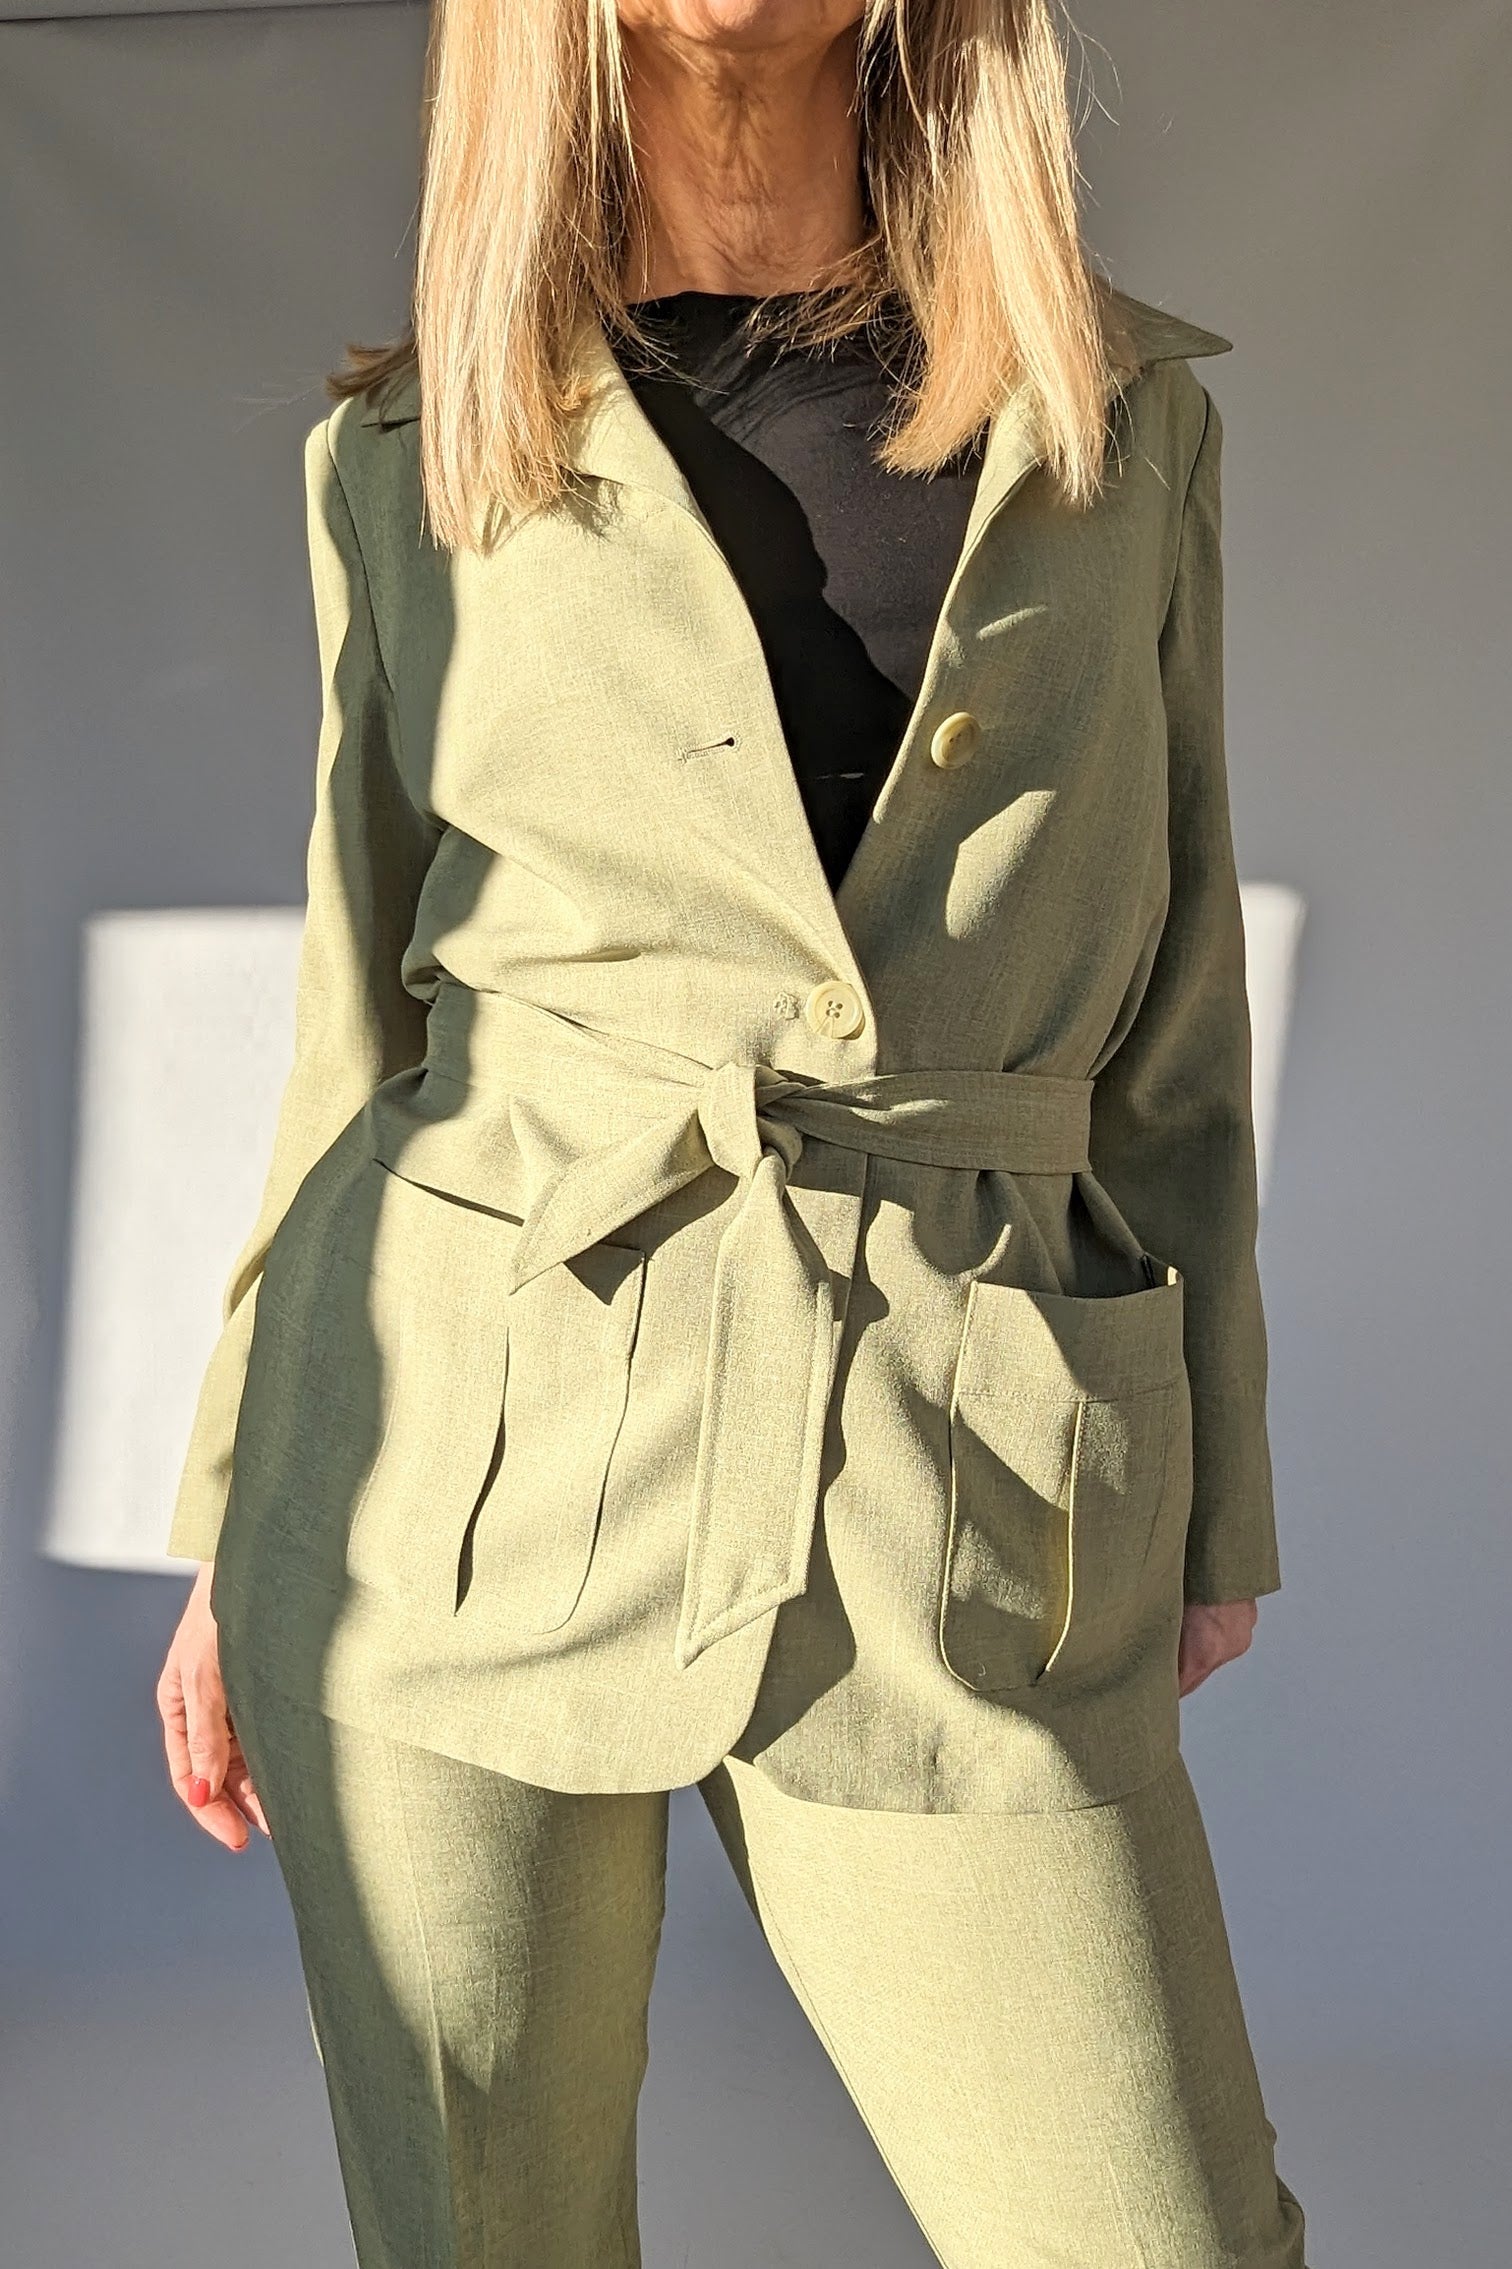 olive green safari style jacket with belt